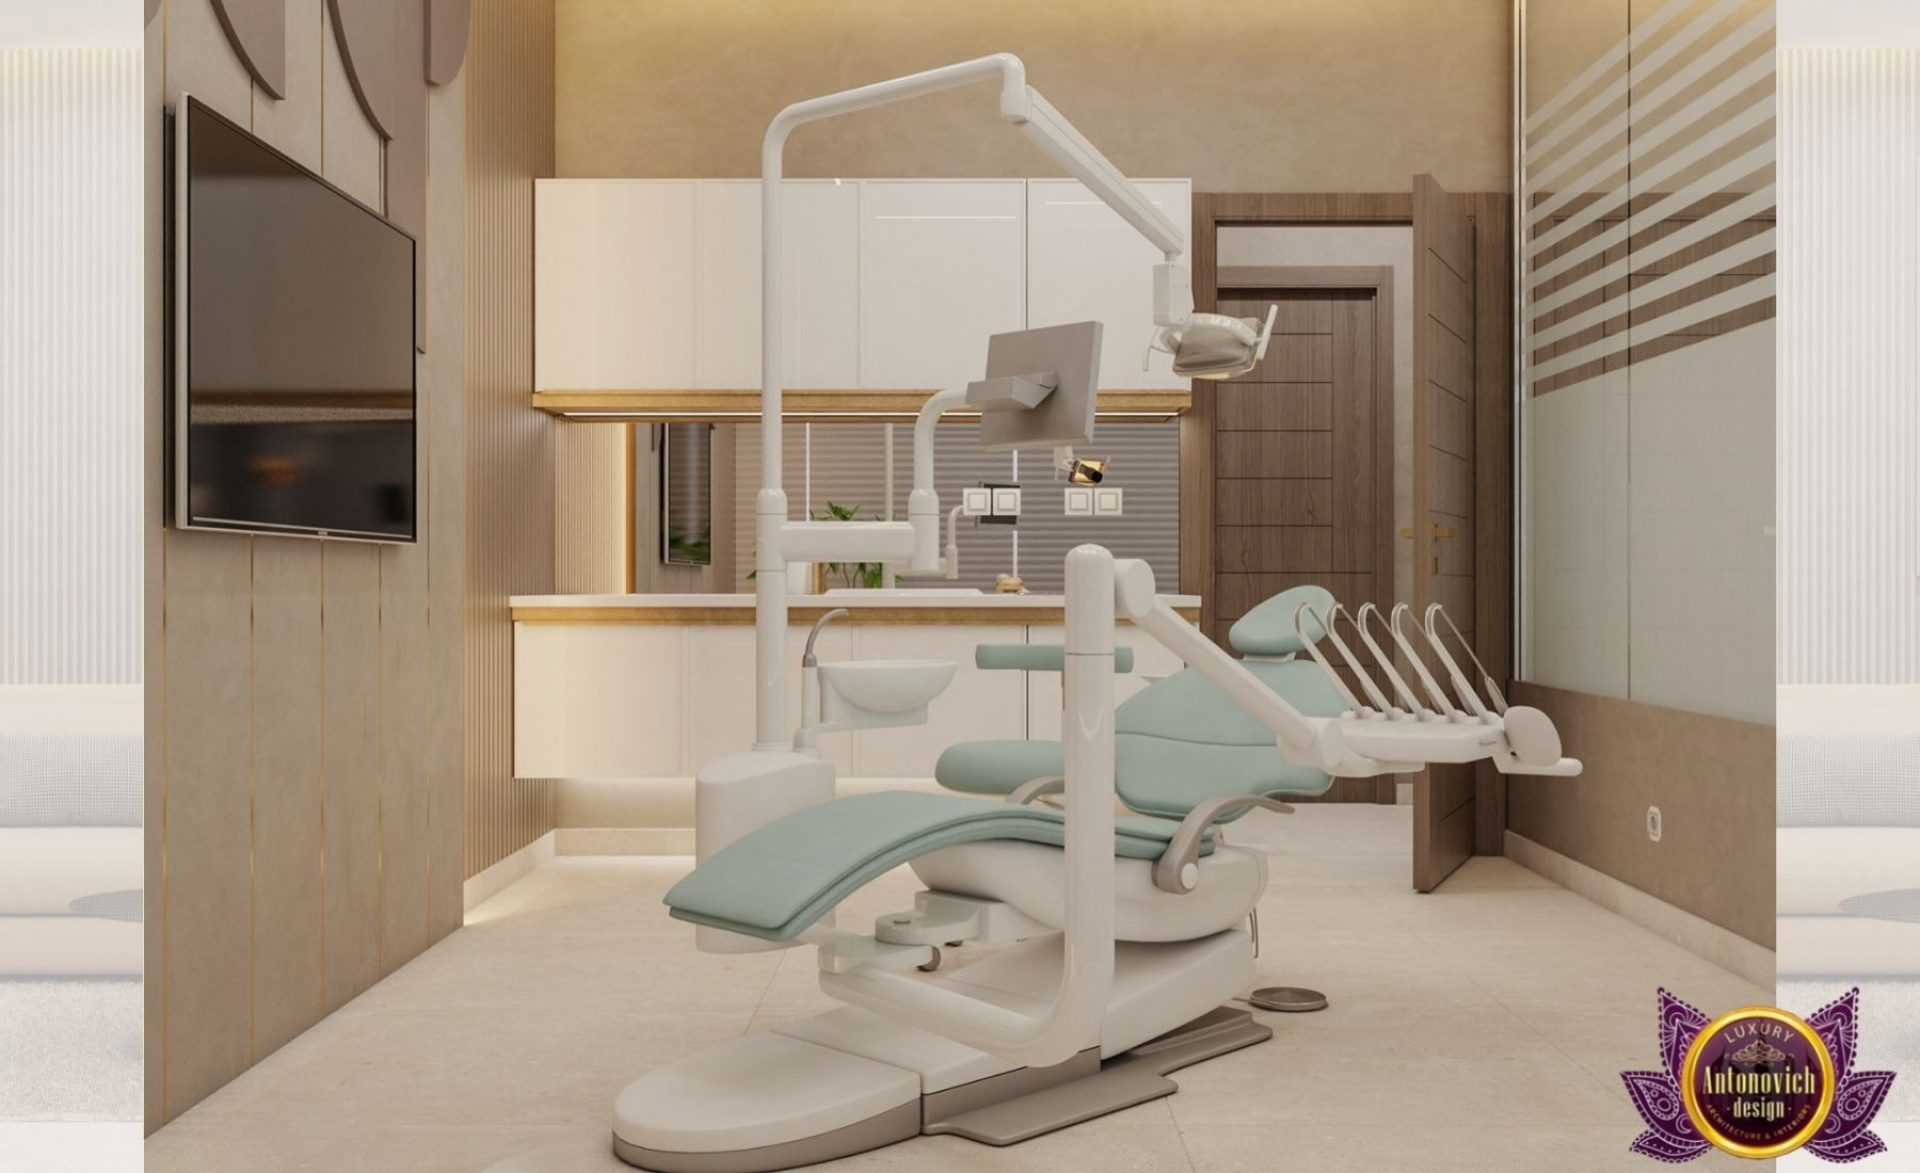 modern dental clinics